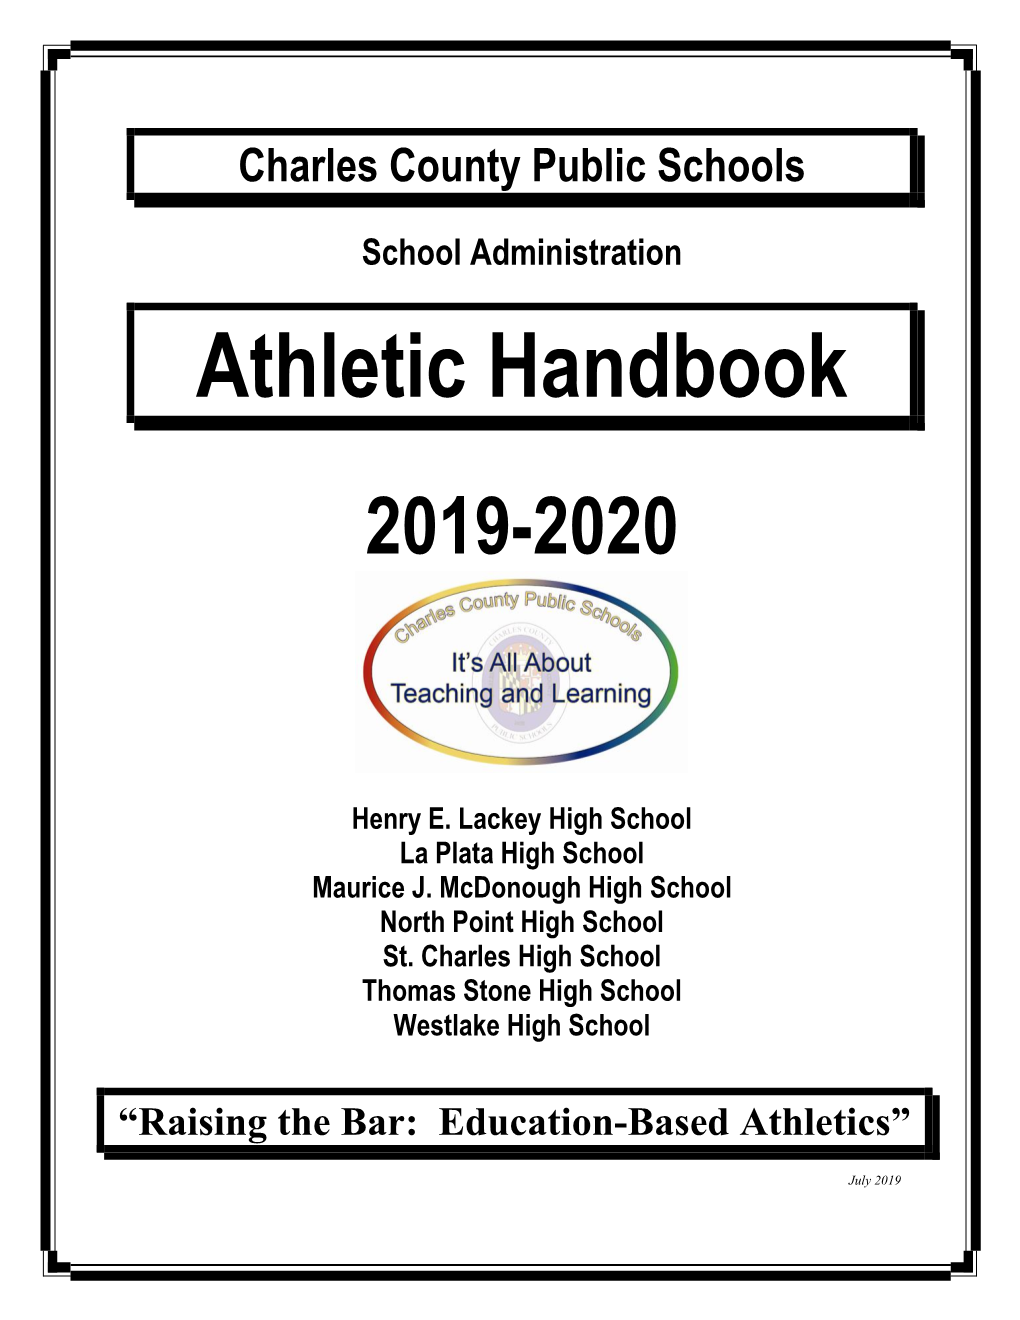 Charles County Athletic Handbook